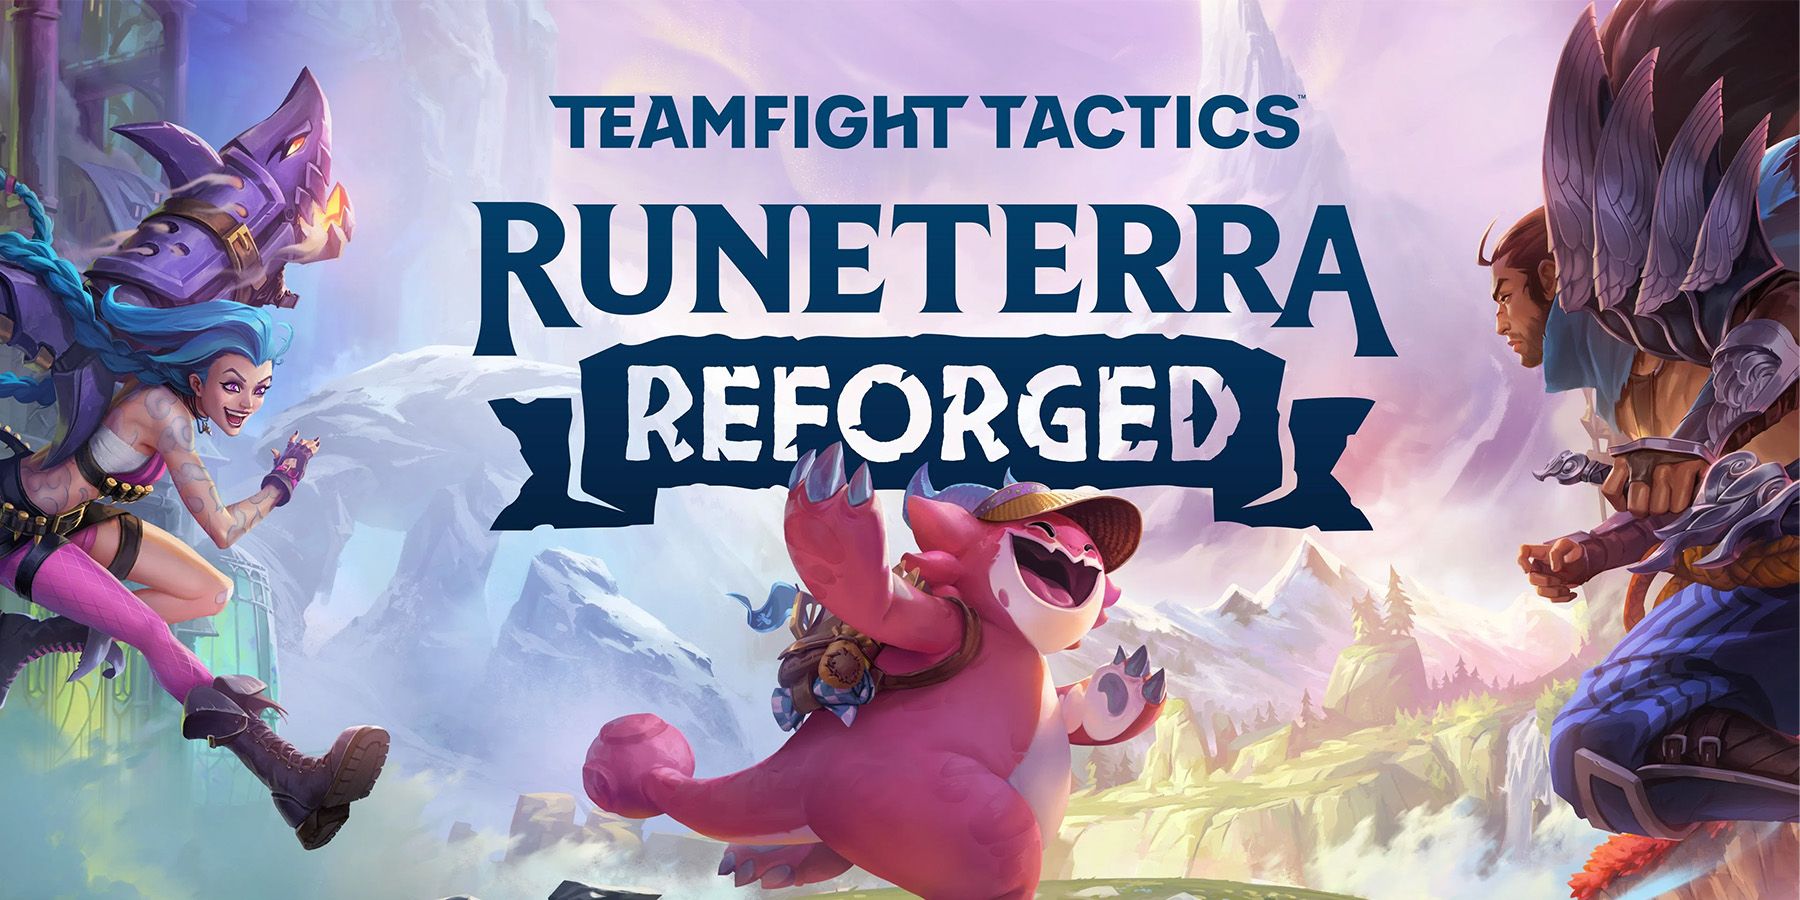 Teamfight Tactics Runeterra Reforged set promotional image